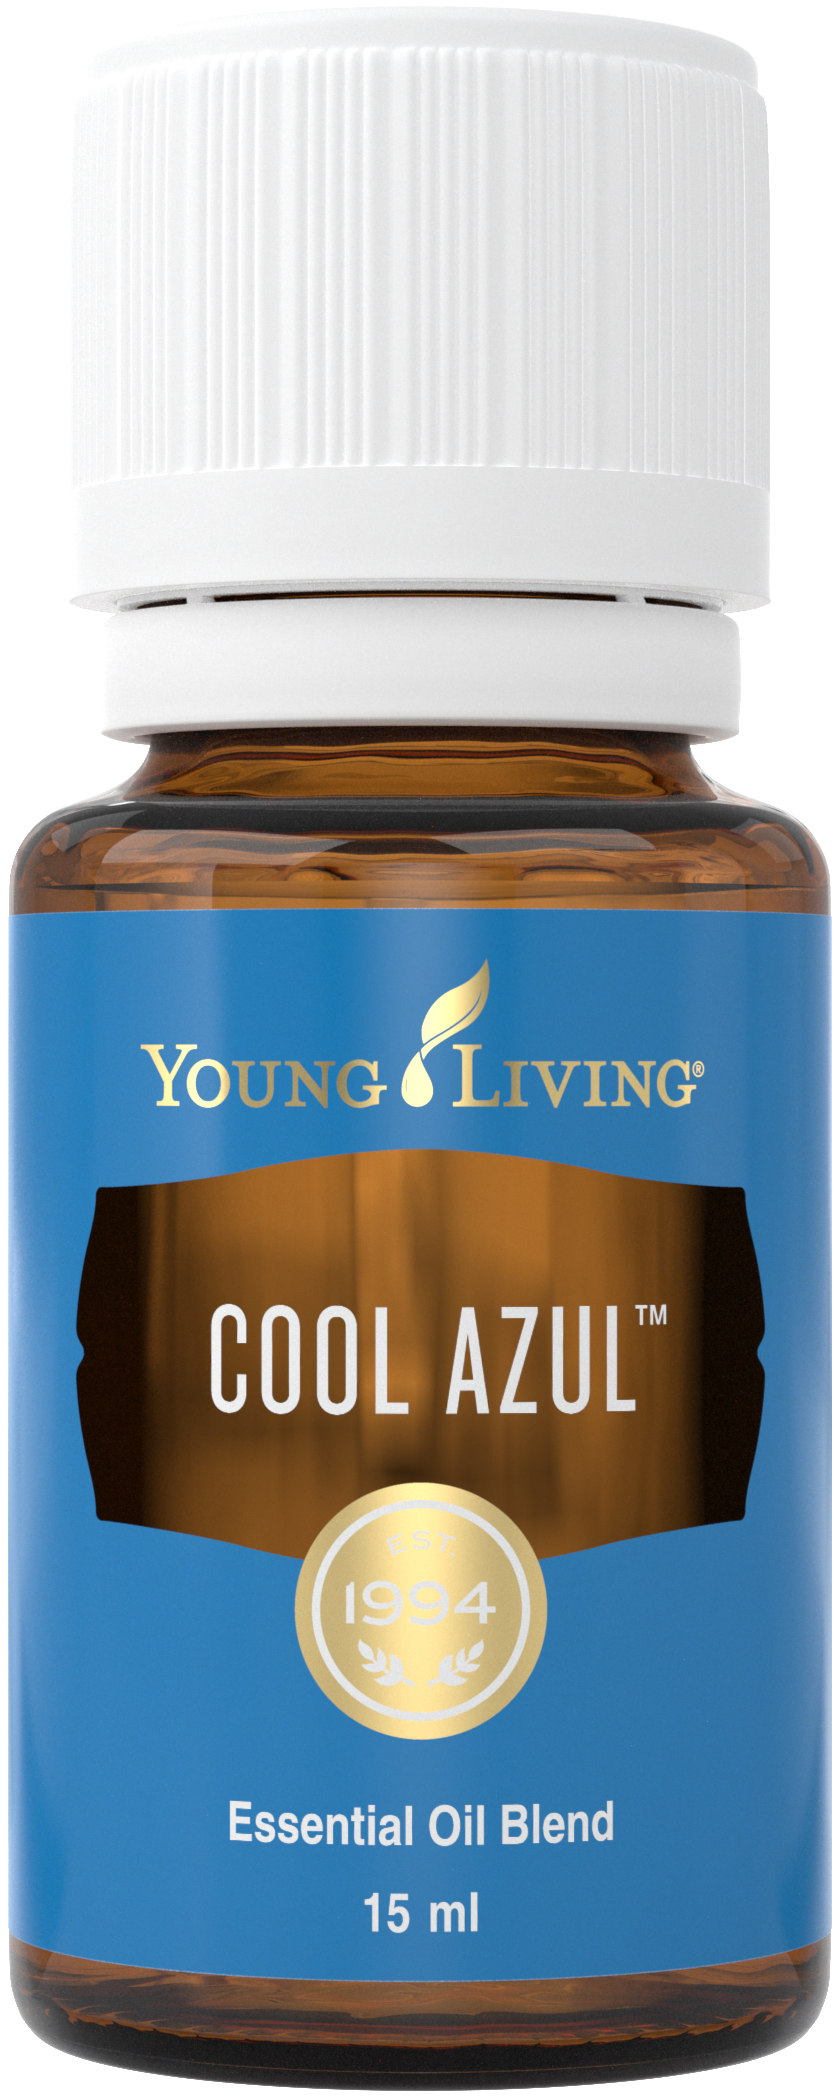 Cool Azul essential oil blend